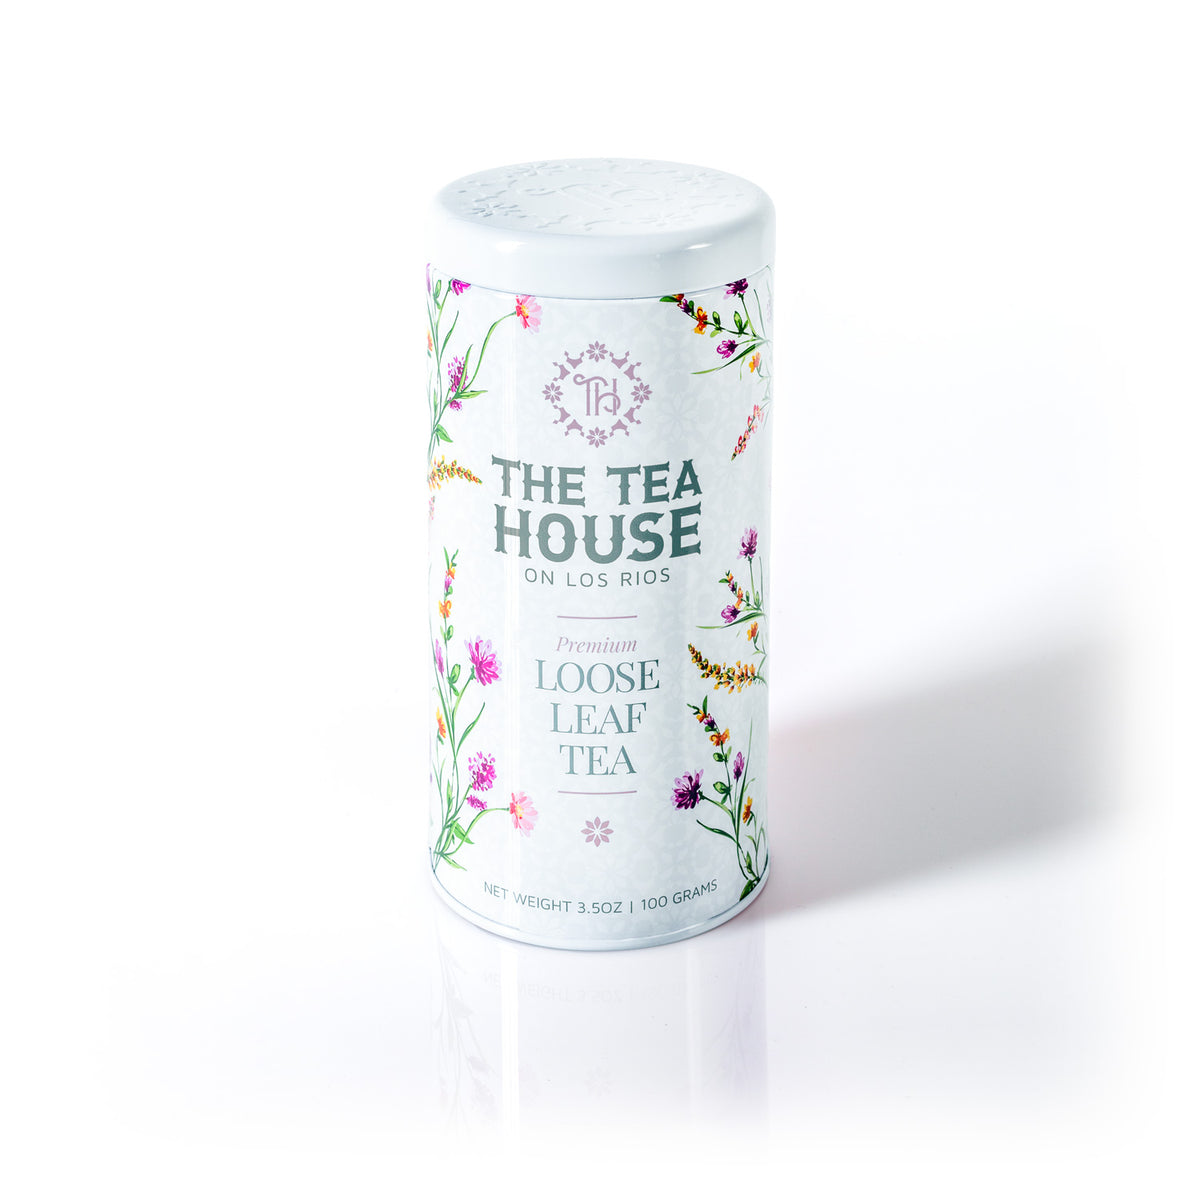 The Tea House on Los Rios releases a 100g Loose Leaf Tea Tin